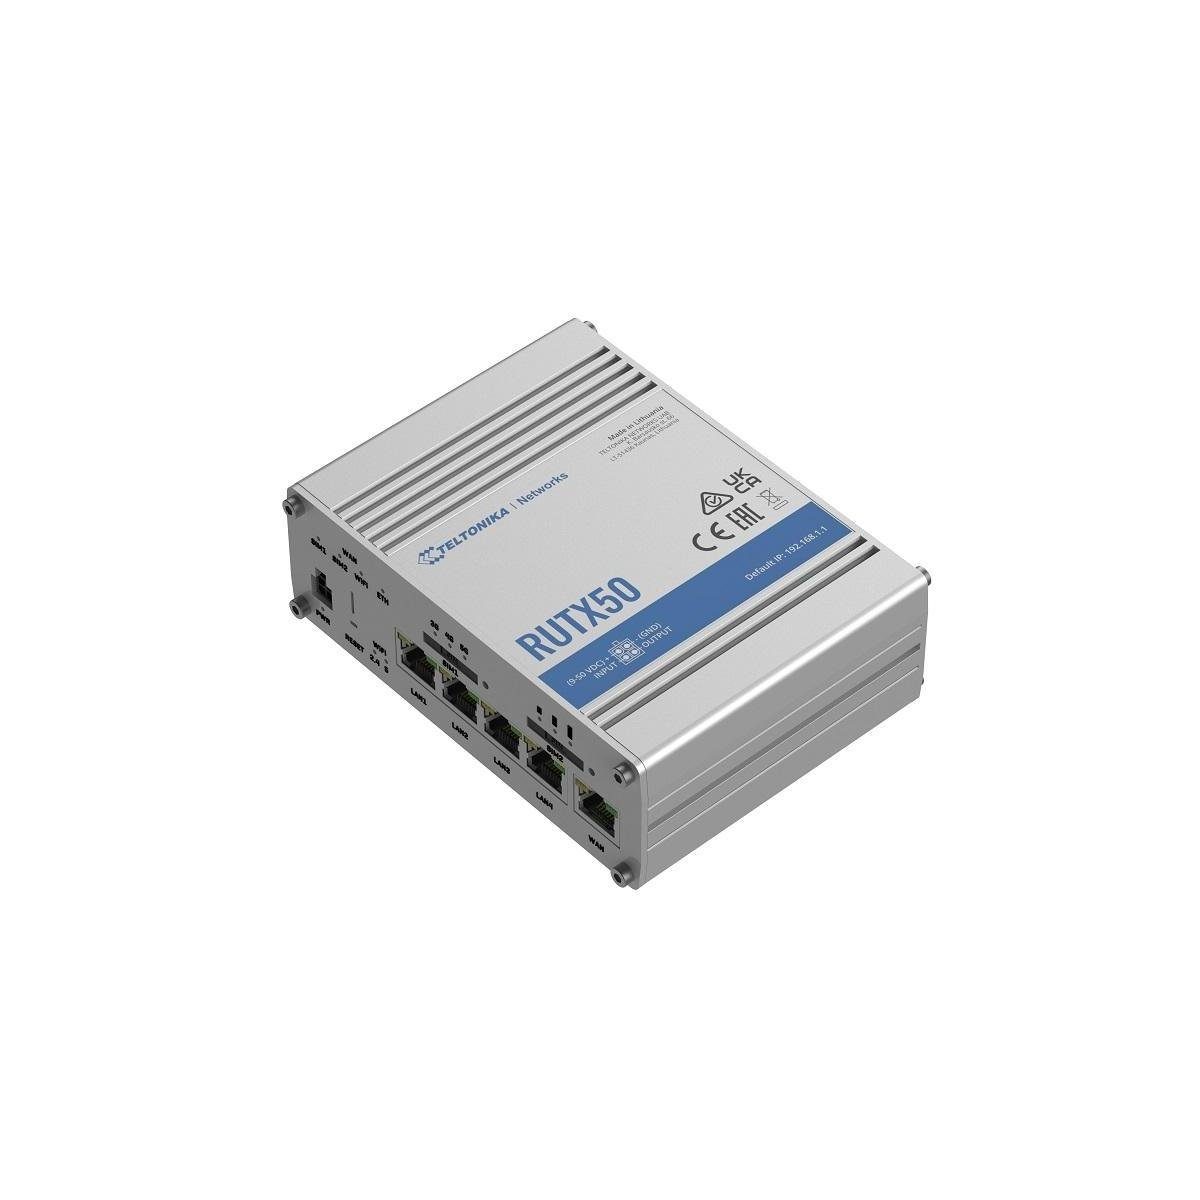 Teltonika RUTX50000000 - Industrieller 5G-Router 4G/LTE-Router